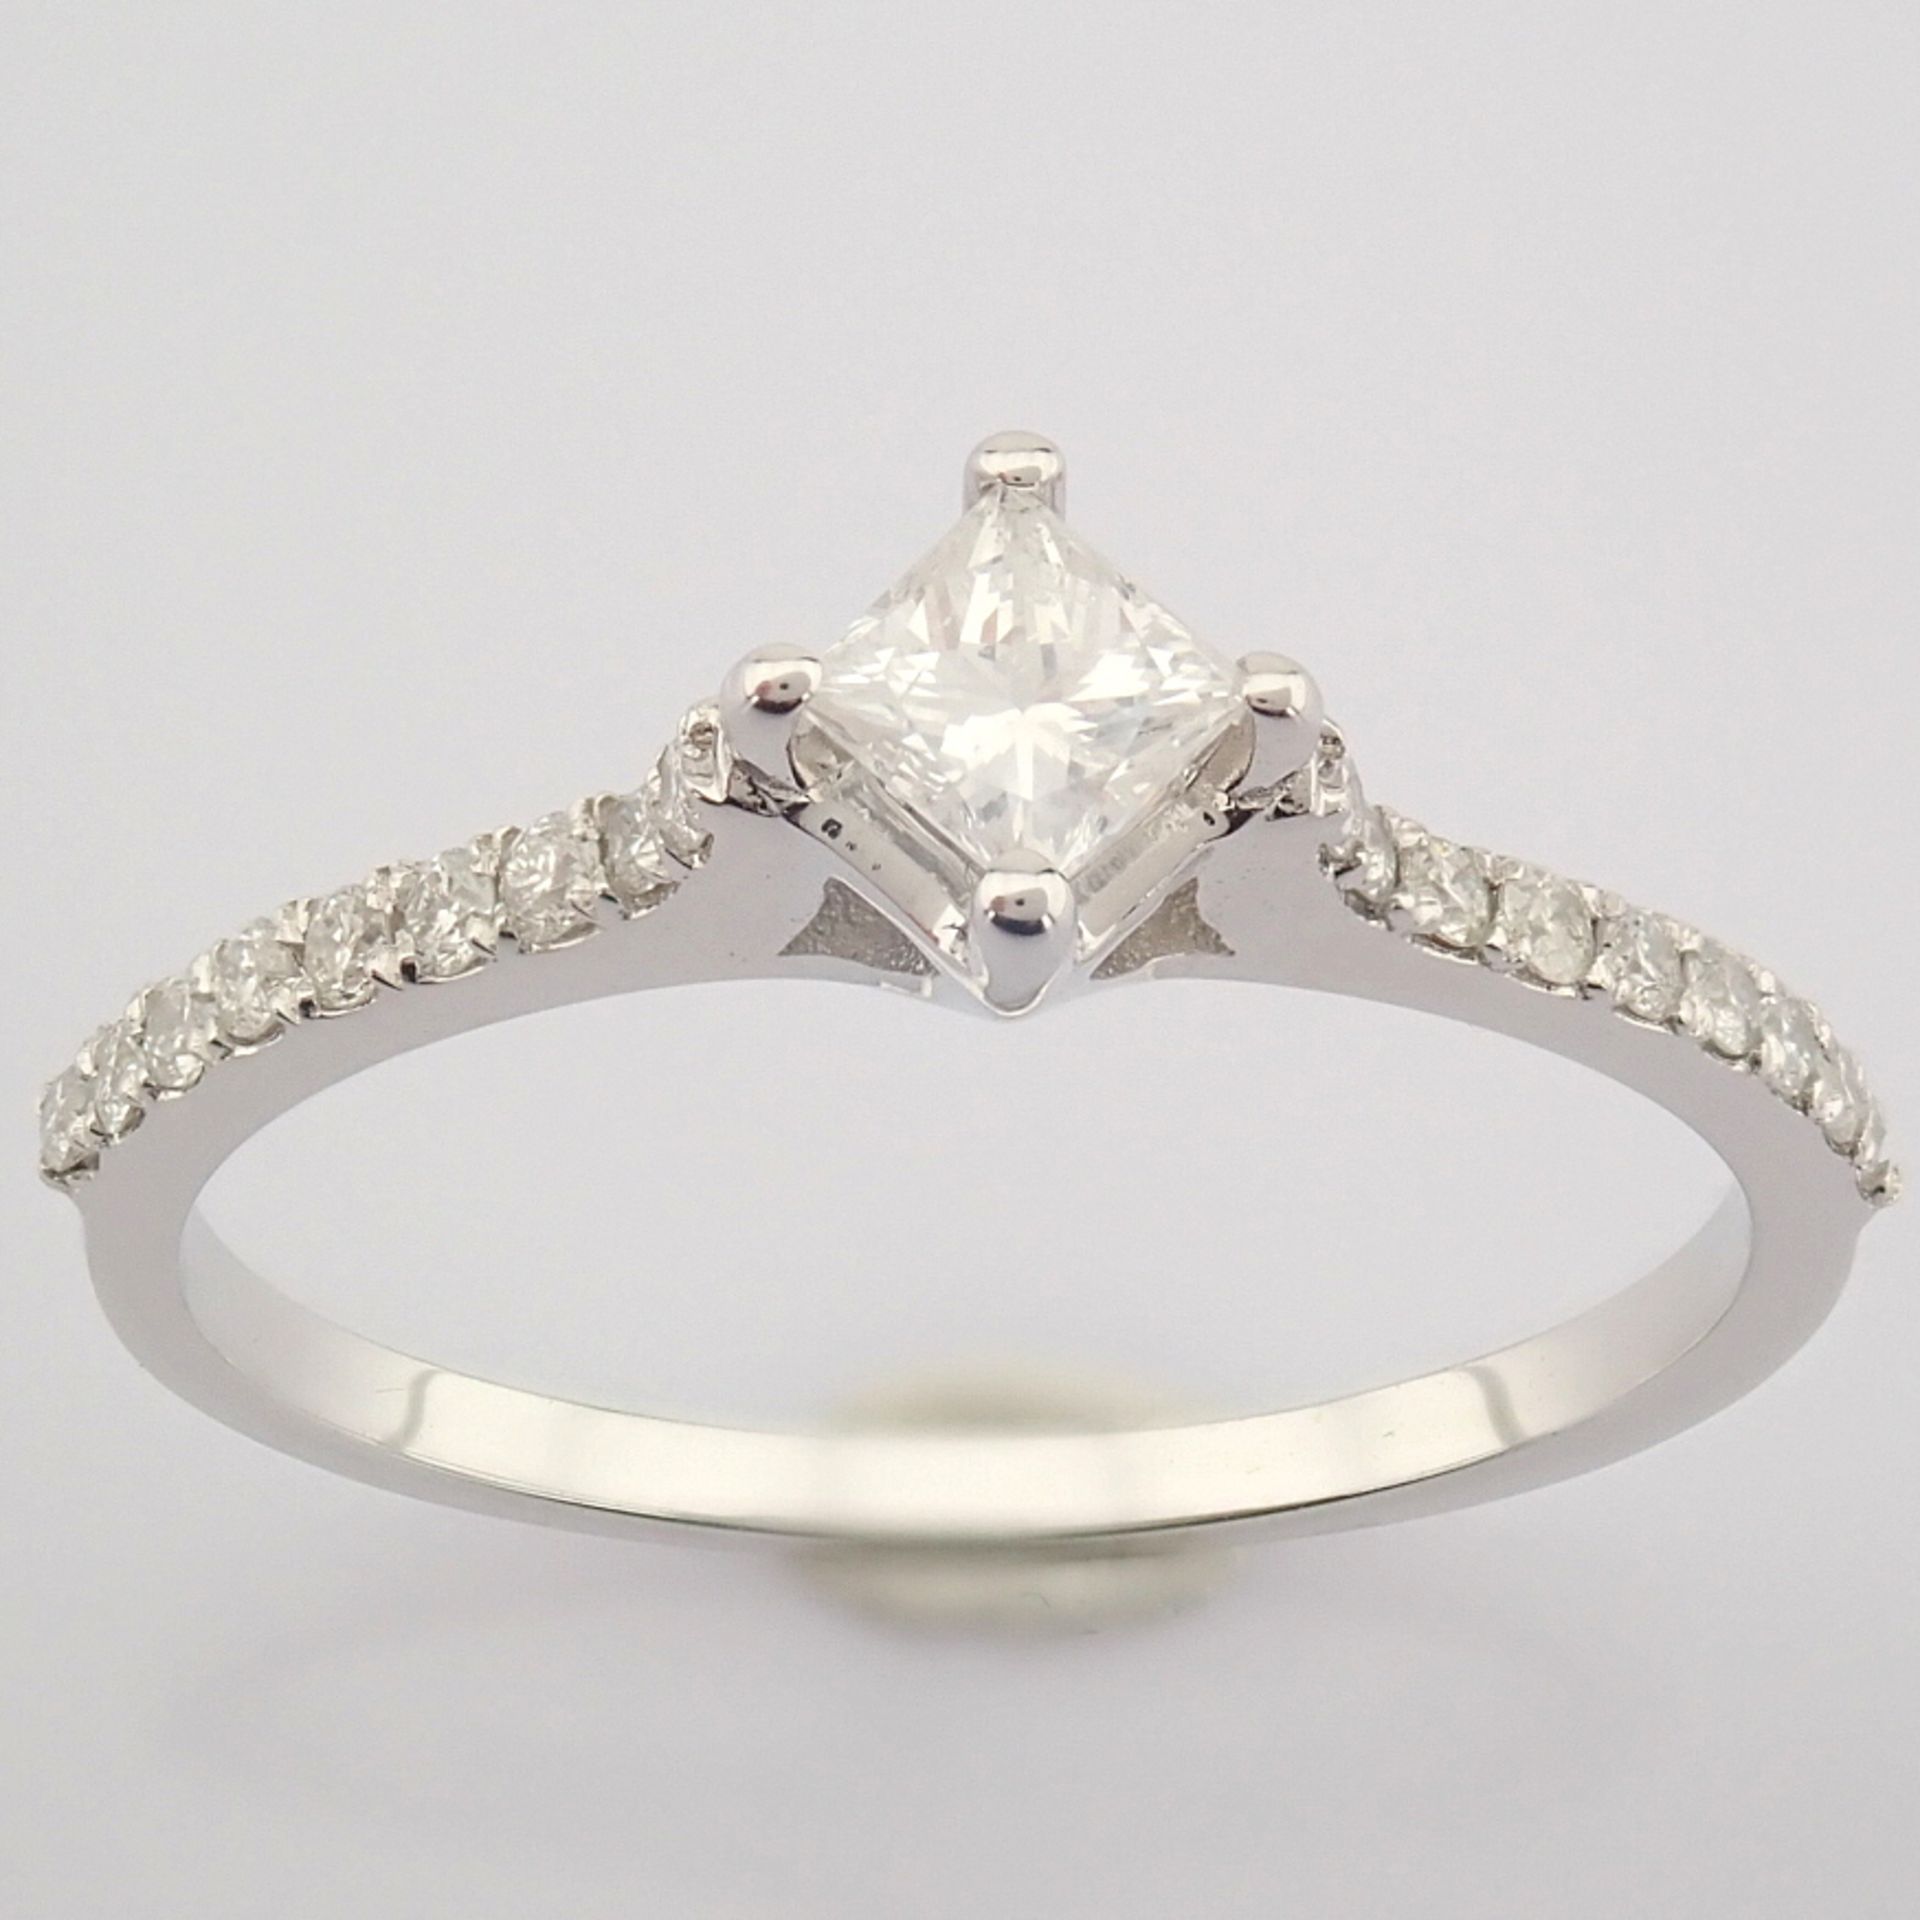 Certificated 14K White Gold Princess Cut Diamond & Diamond Ring (Total 0.4 ct Stone)